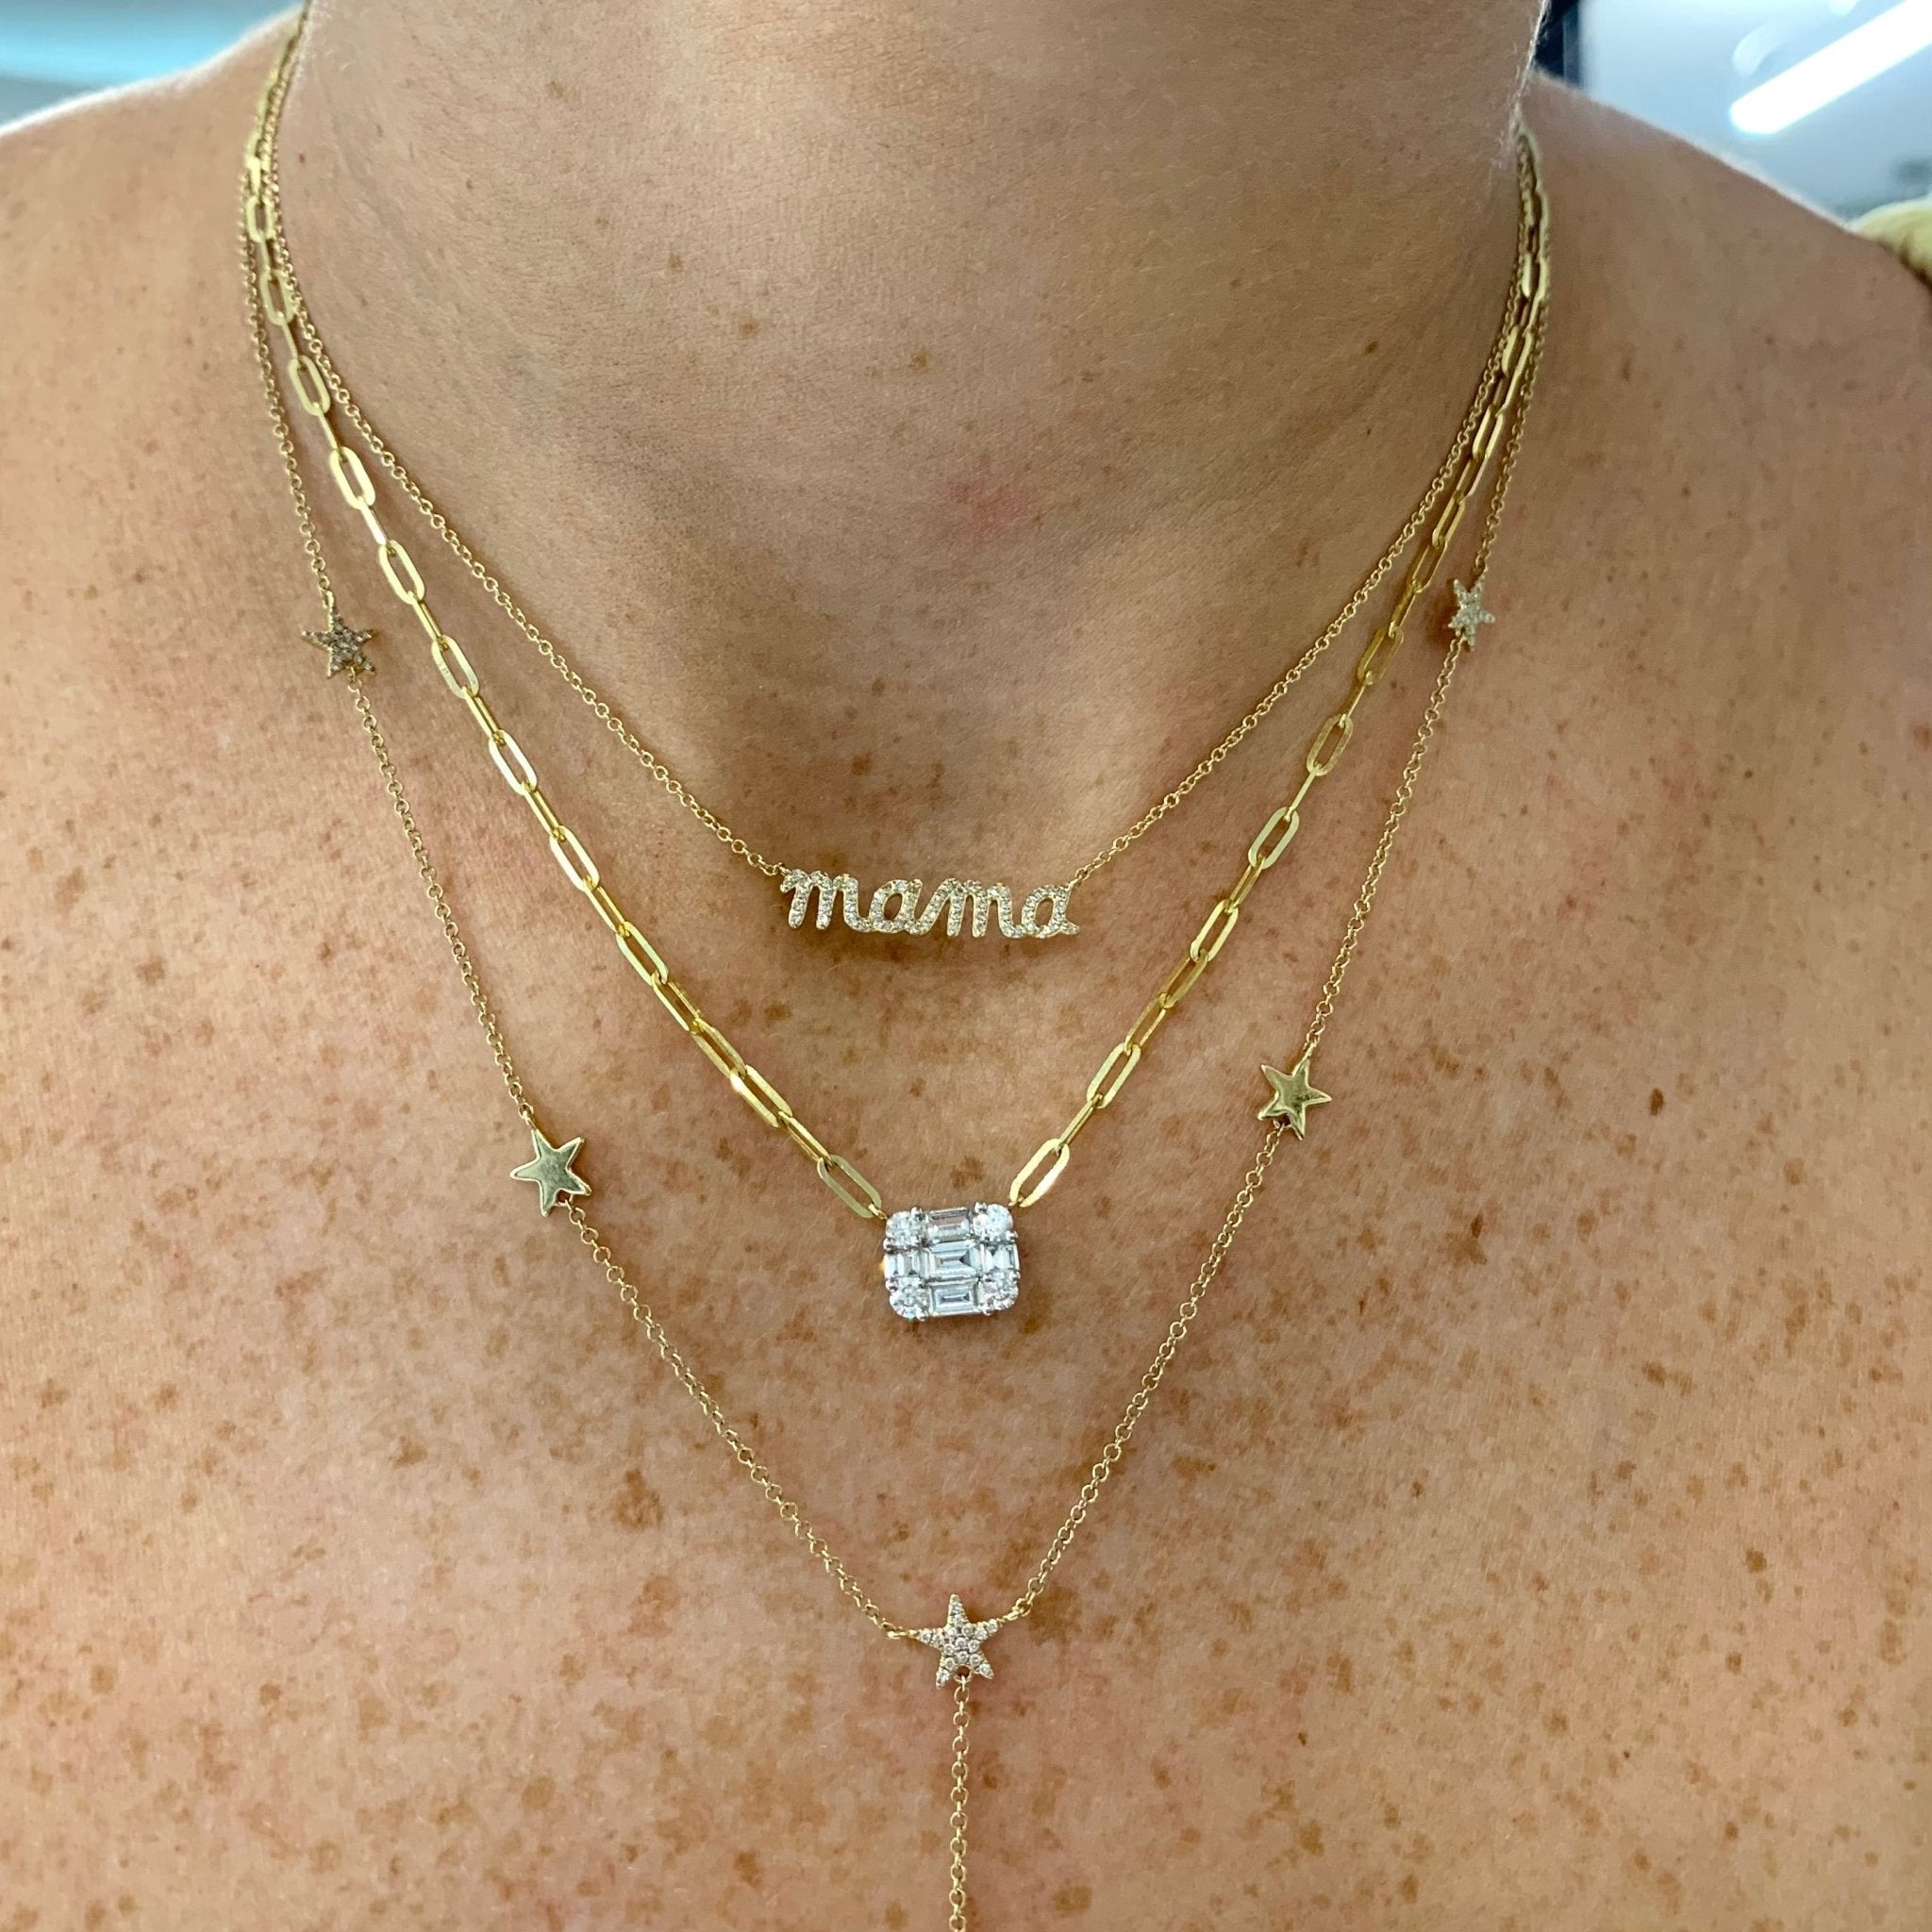 SecretBox Mama Necklace 14karat Gold Dipped Brand New | eBay